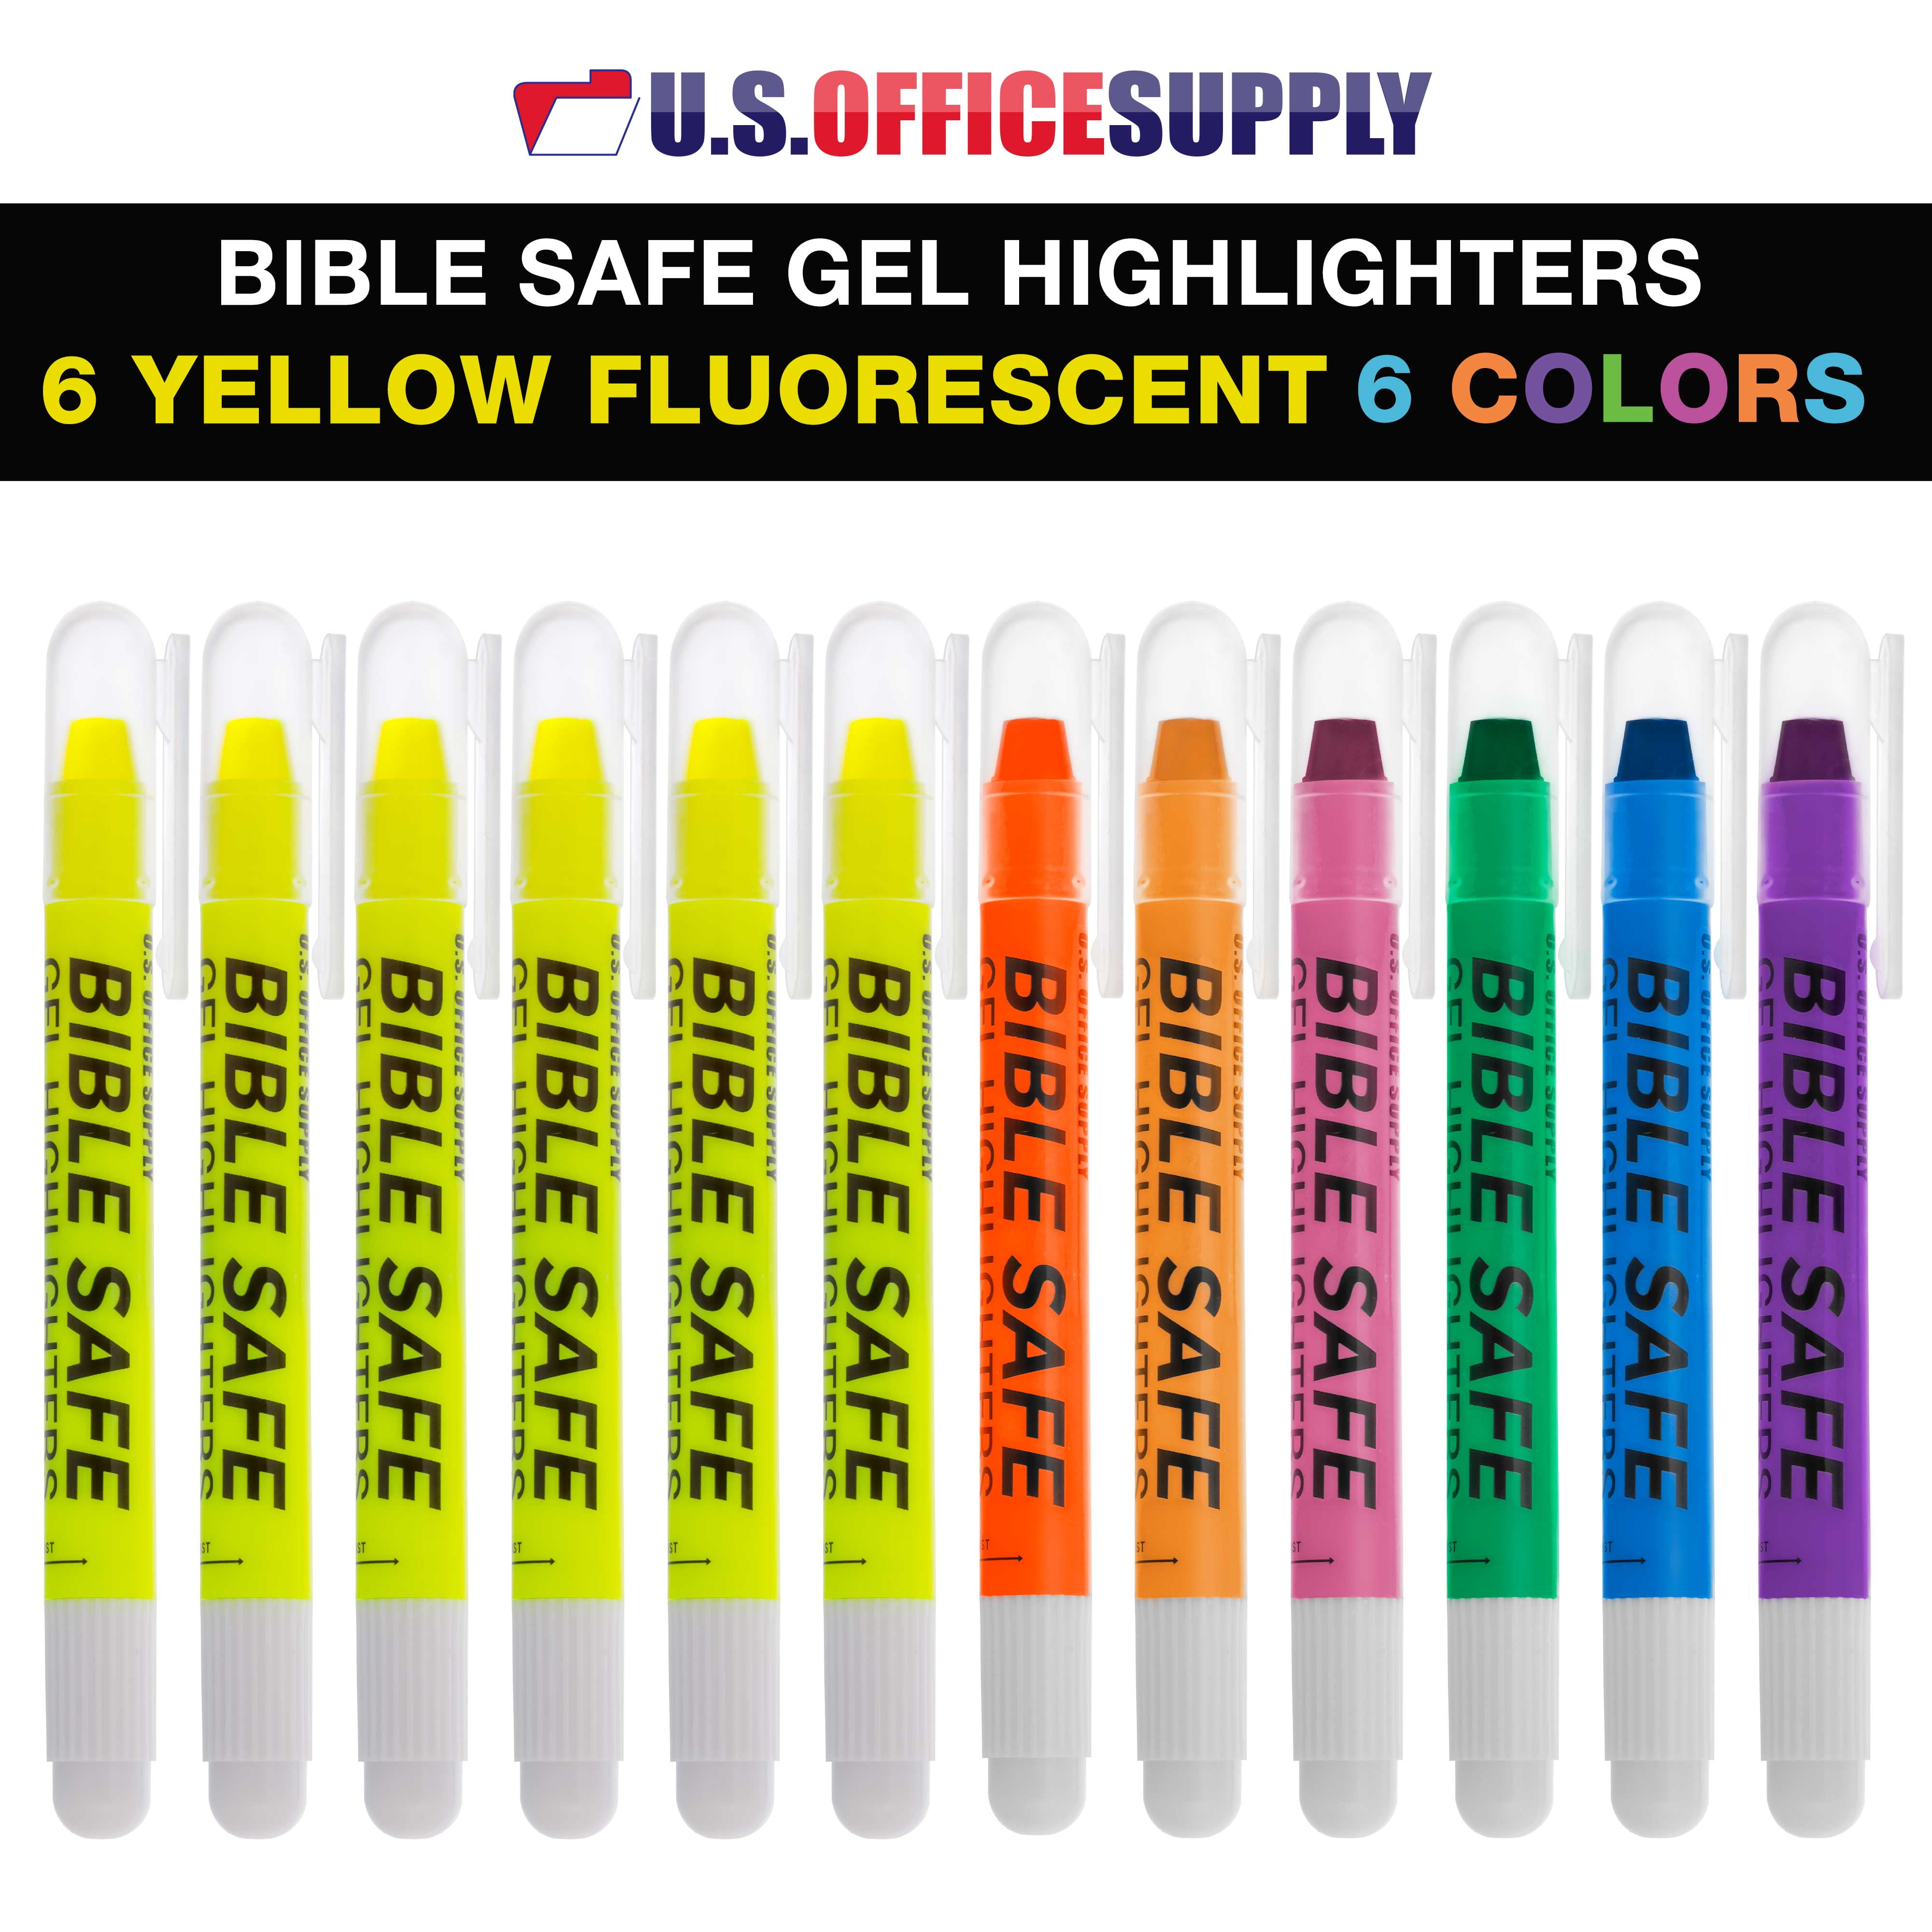 Bible Safe Gel Highlighters, Fluorescent Colors - Yellow, Orange, Pink,  Blue, Green, Purple, 6 Highlighters - Harris Teeter